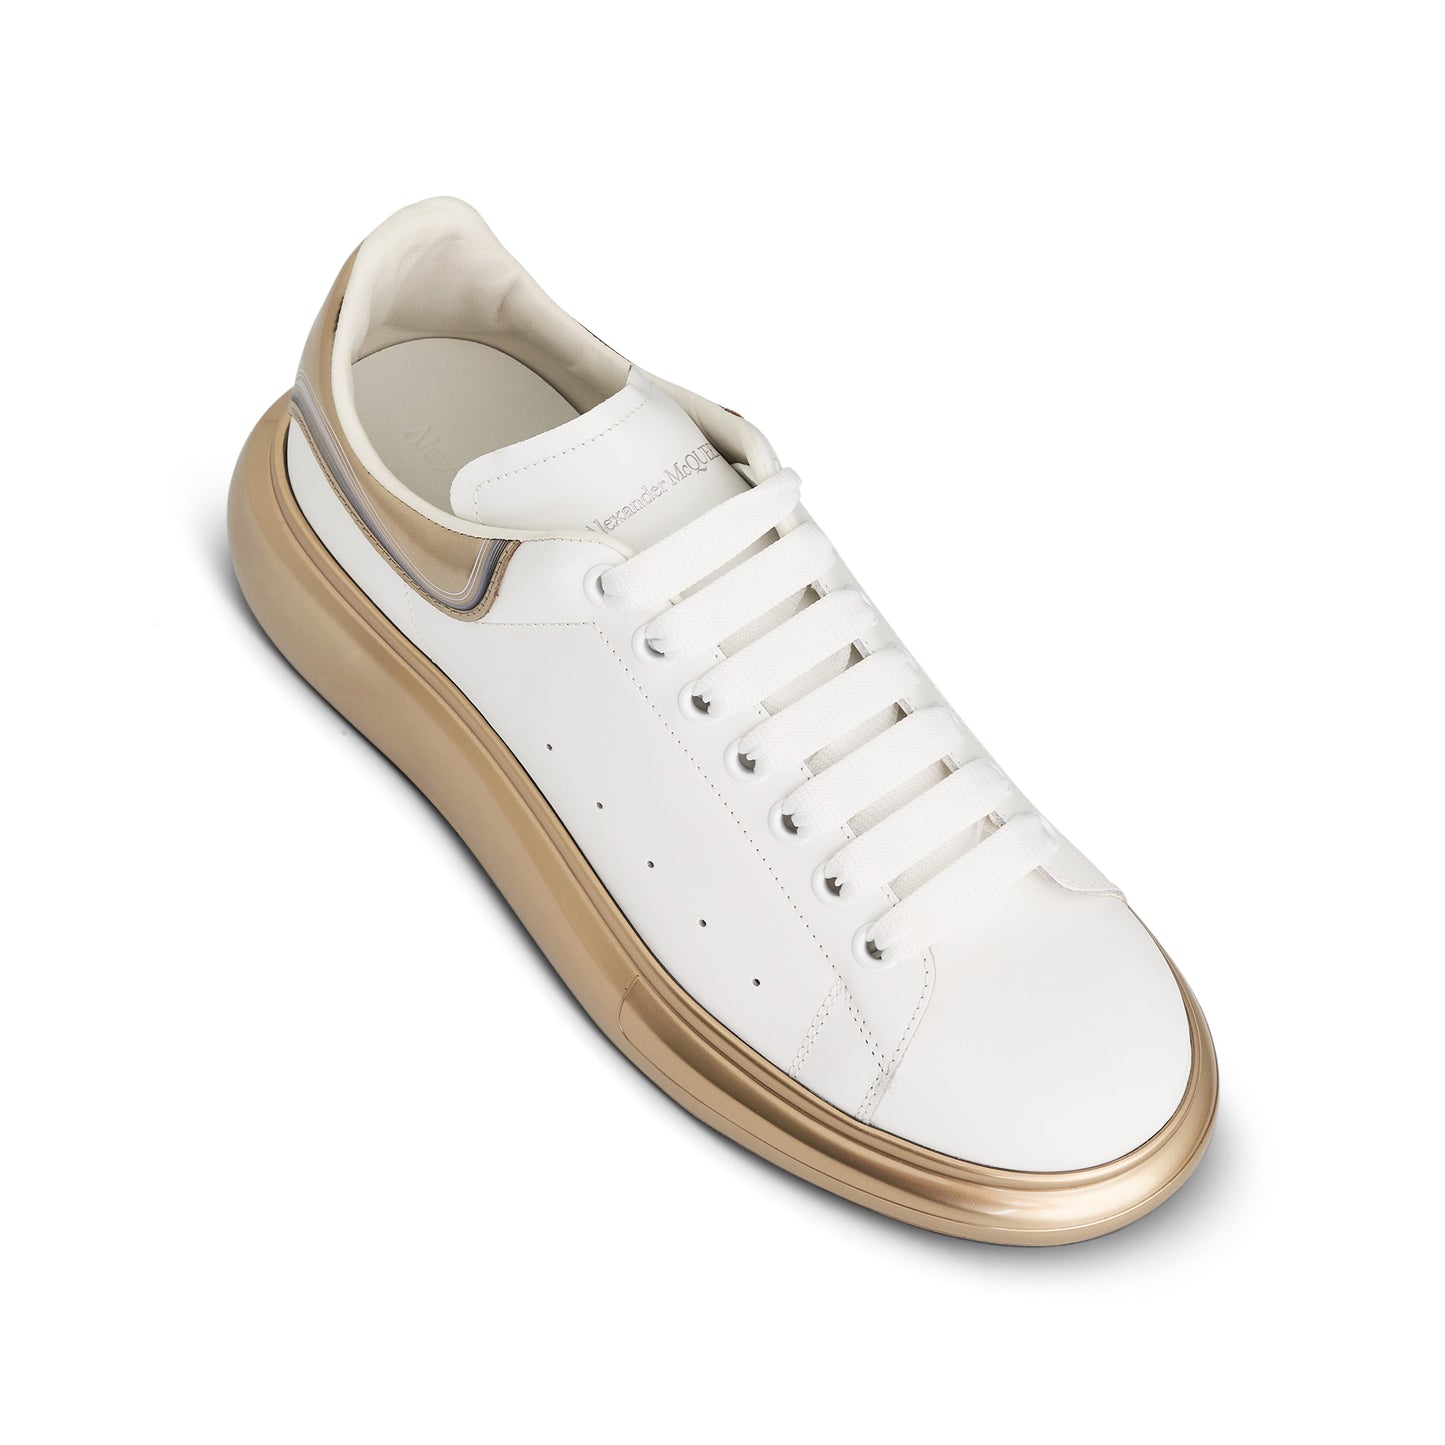 Larry Oversized Sneaker in White/Vanilla